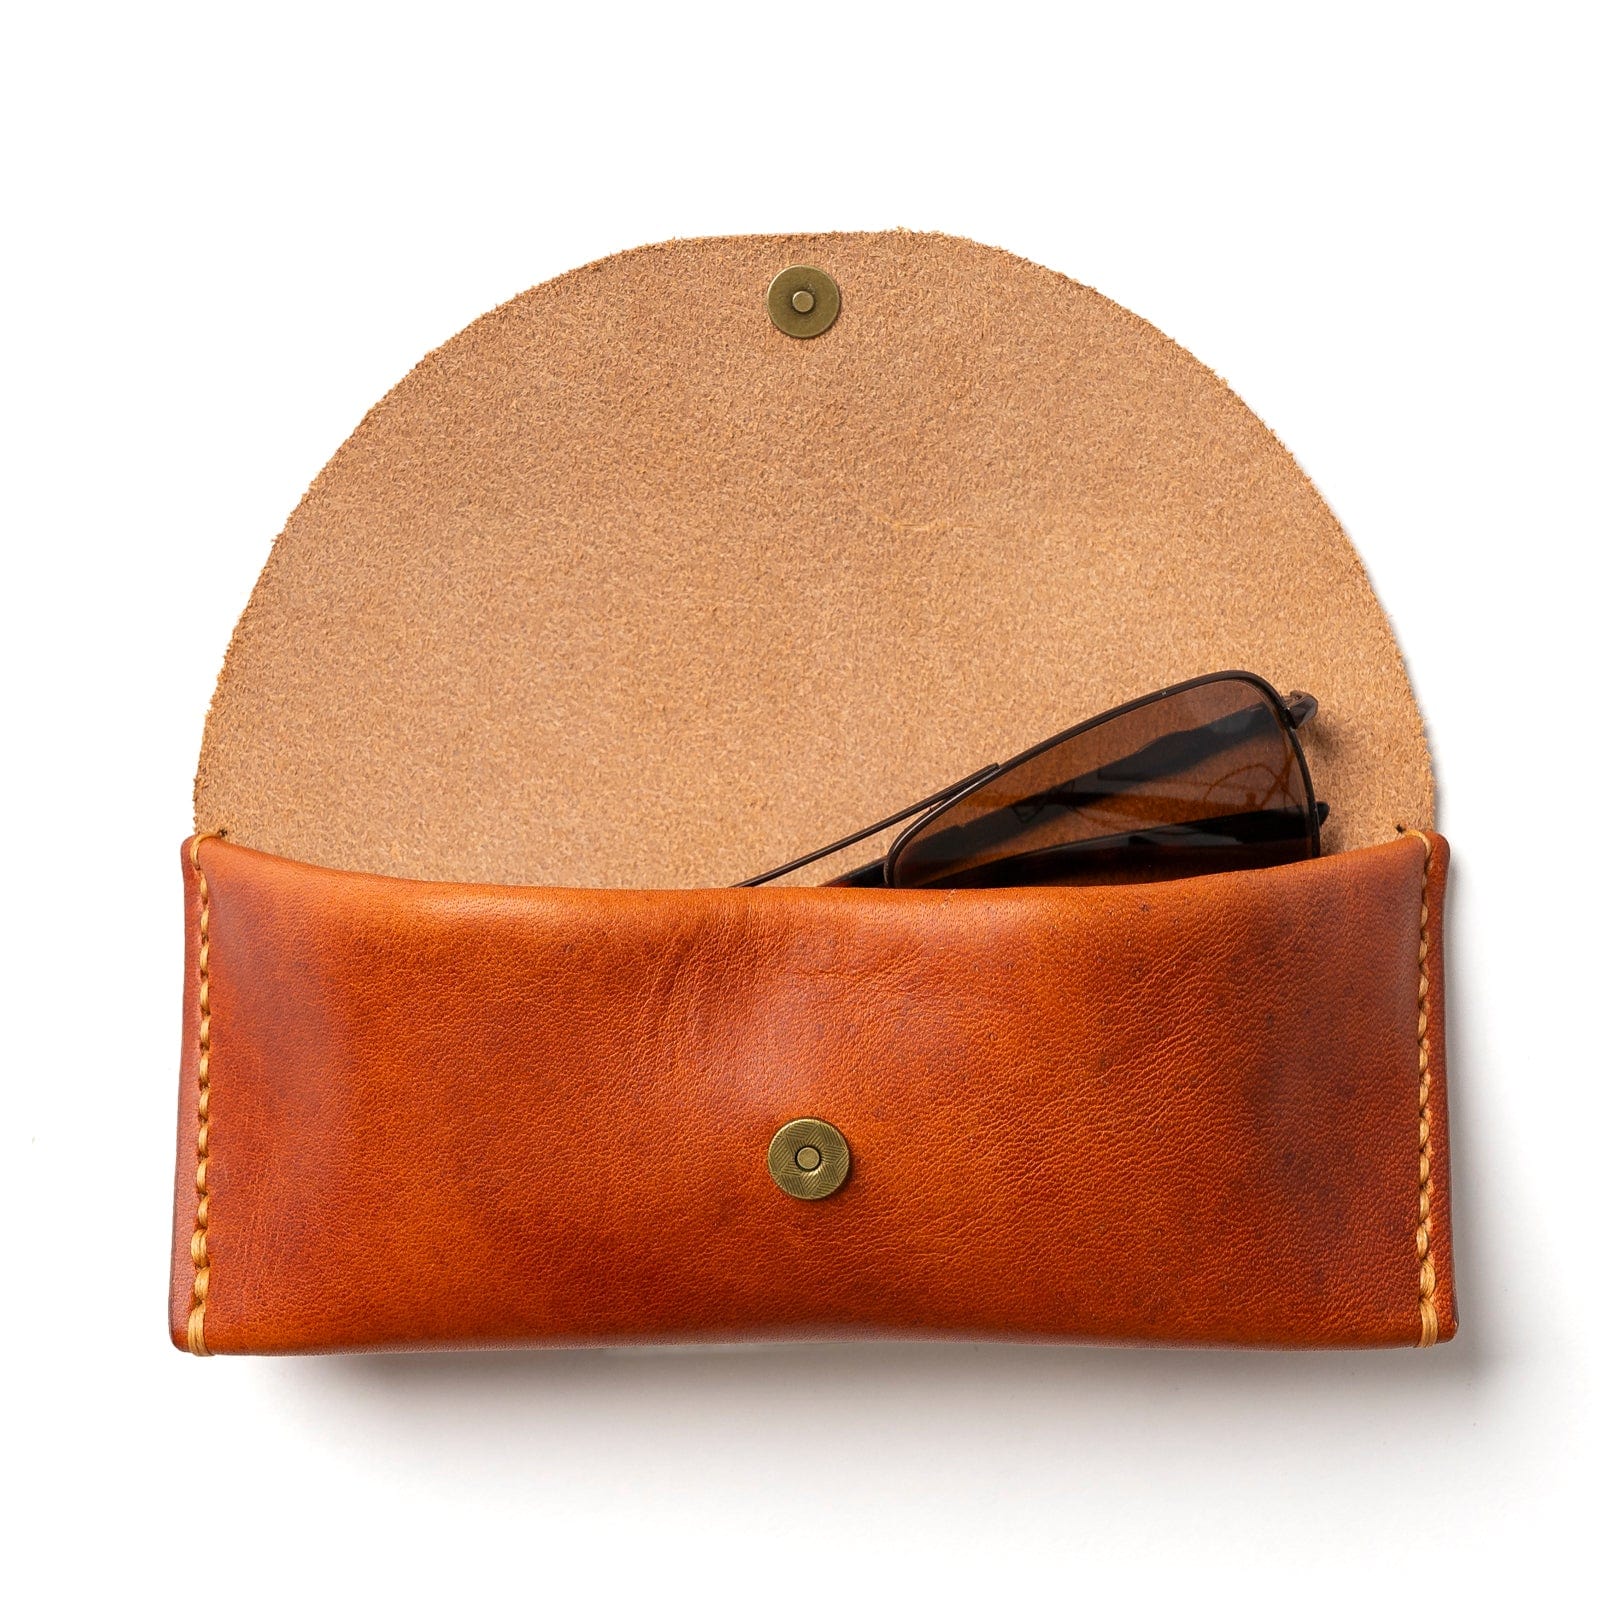 Sunglass Case - English Tan Soft Leather